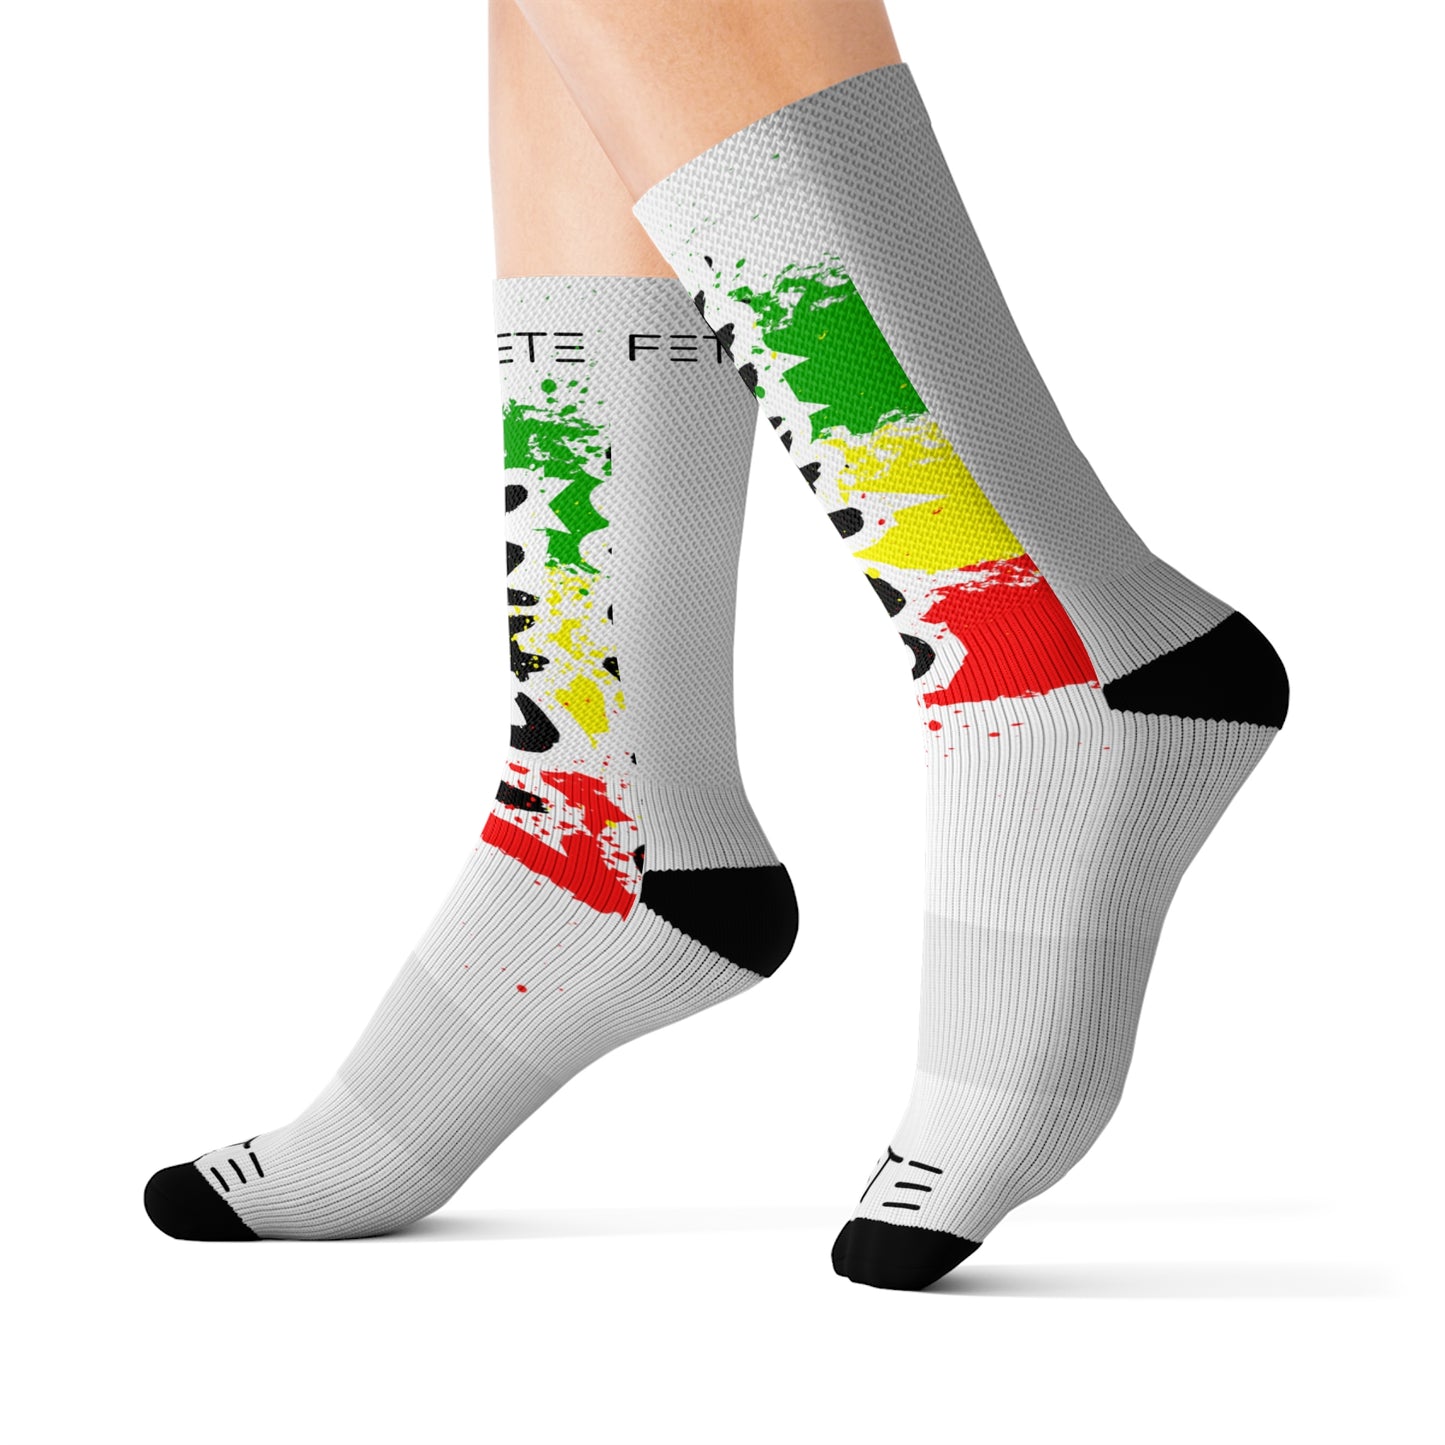 Team Guyana Sublimation Socks